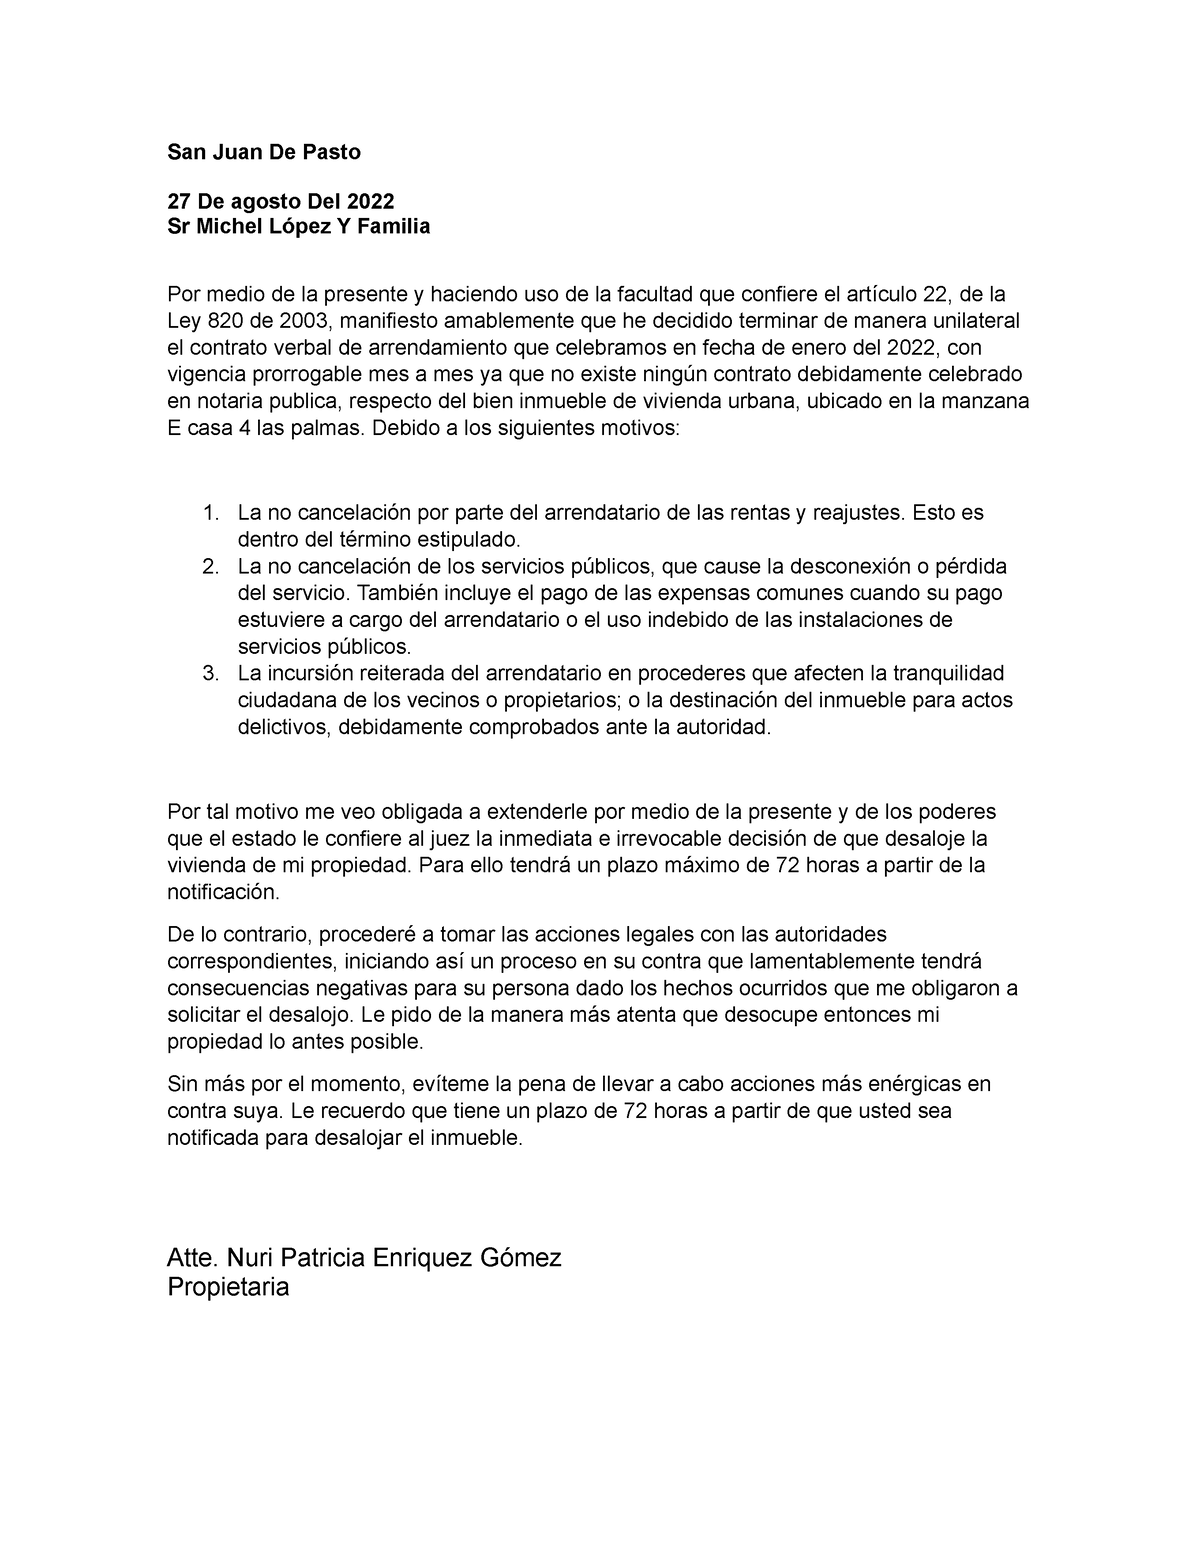 Acta de desalojo - ssssssssssssssssssssssssss - San Juan De Pasto 27 De  agosto Del 2022 Sr Michel - Studocu